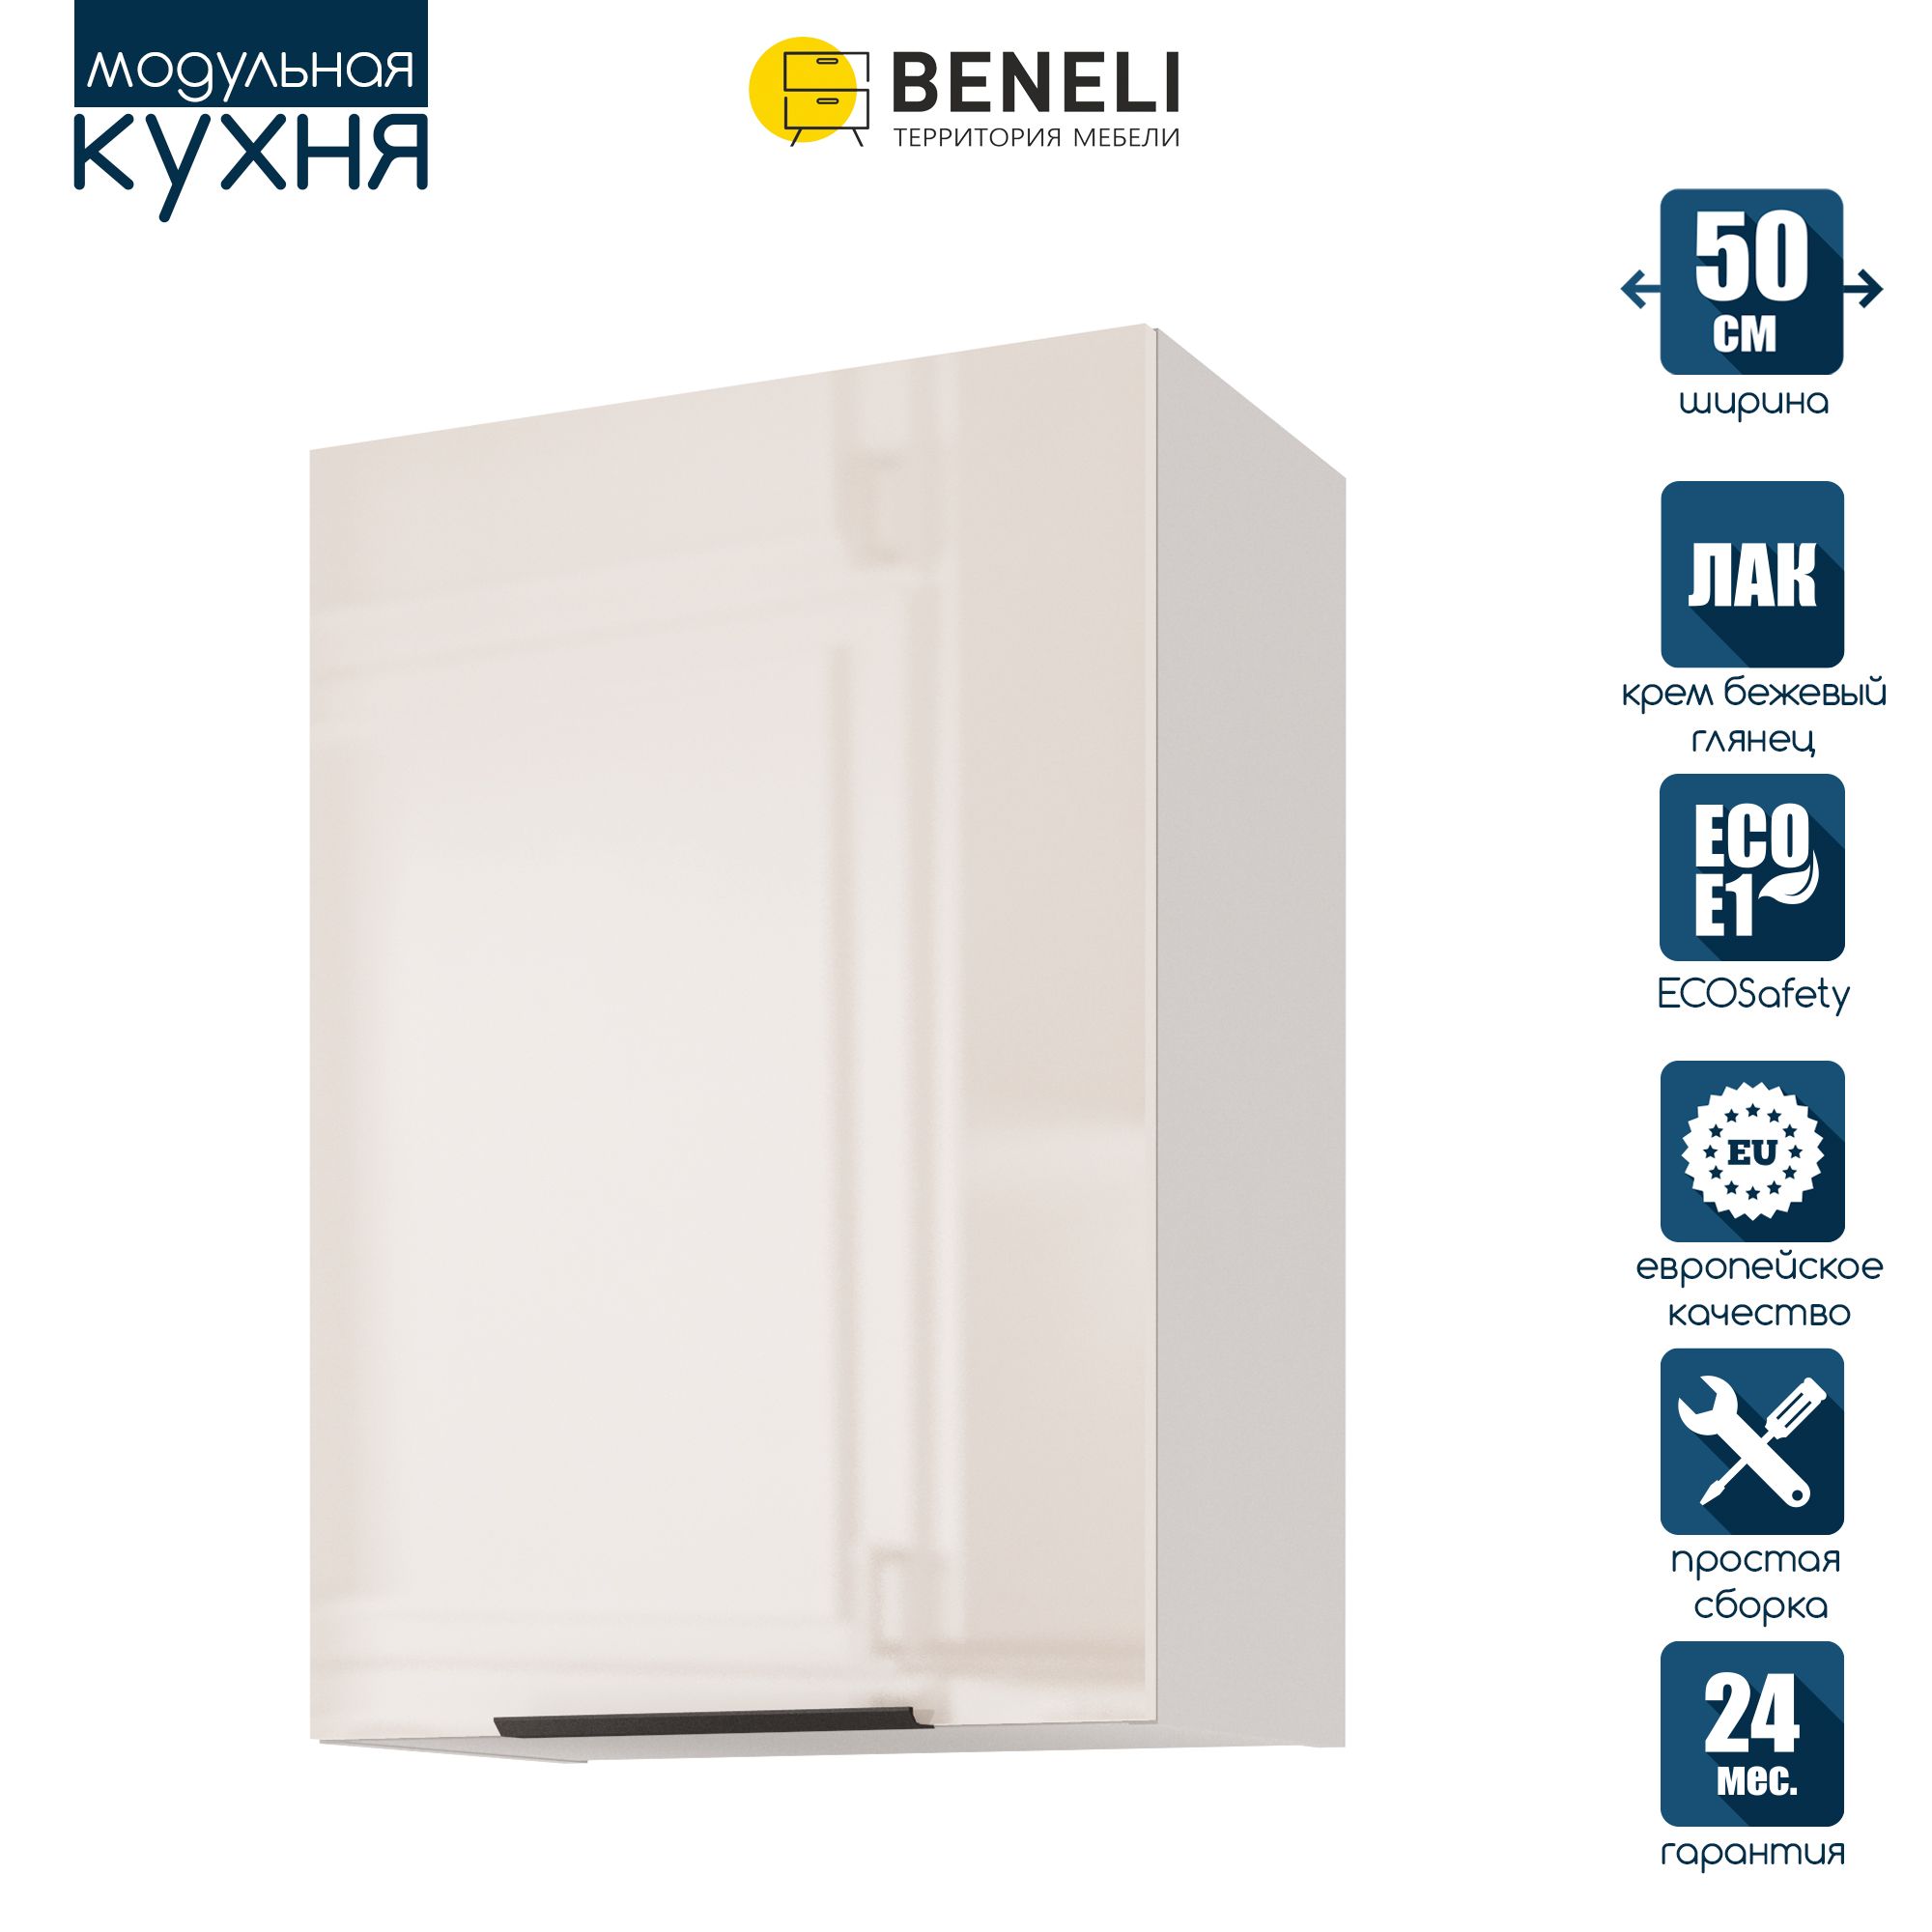 Кухонный модуль навесной Beneli COLOR, Крем бежевый глянец , 50х31,2х72 см, 1 шт.